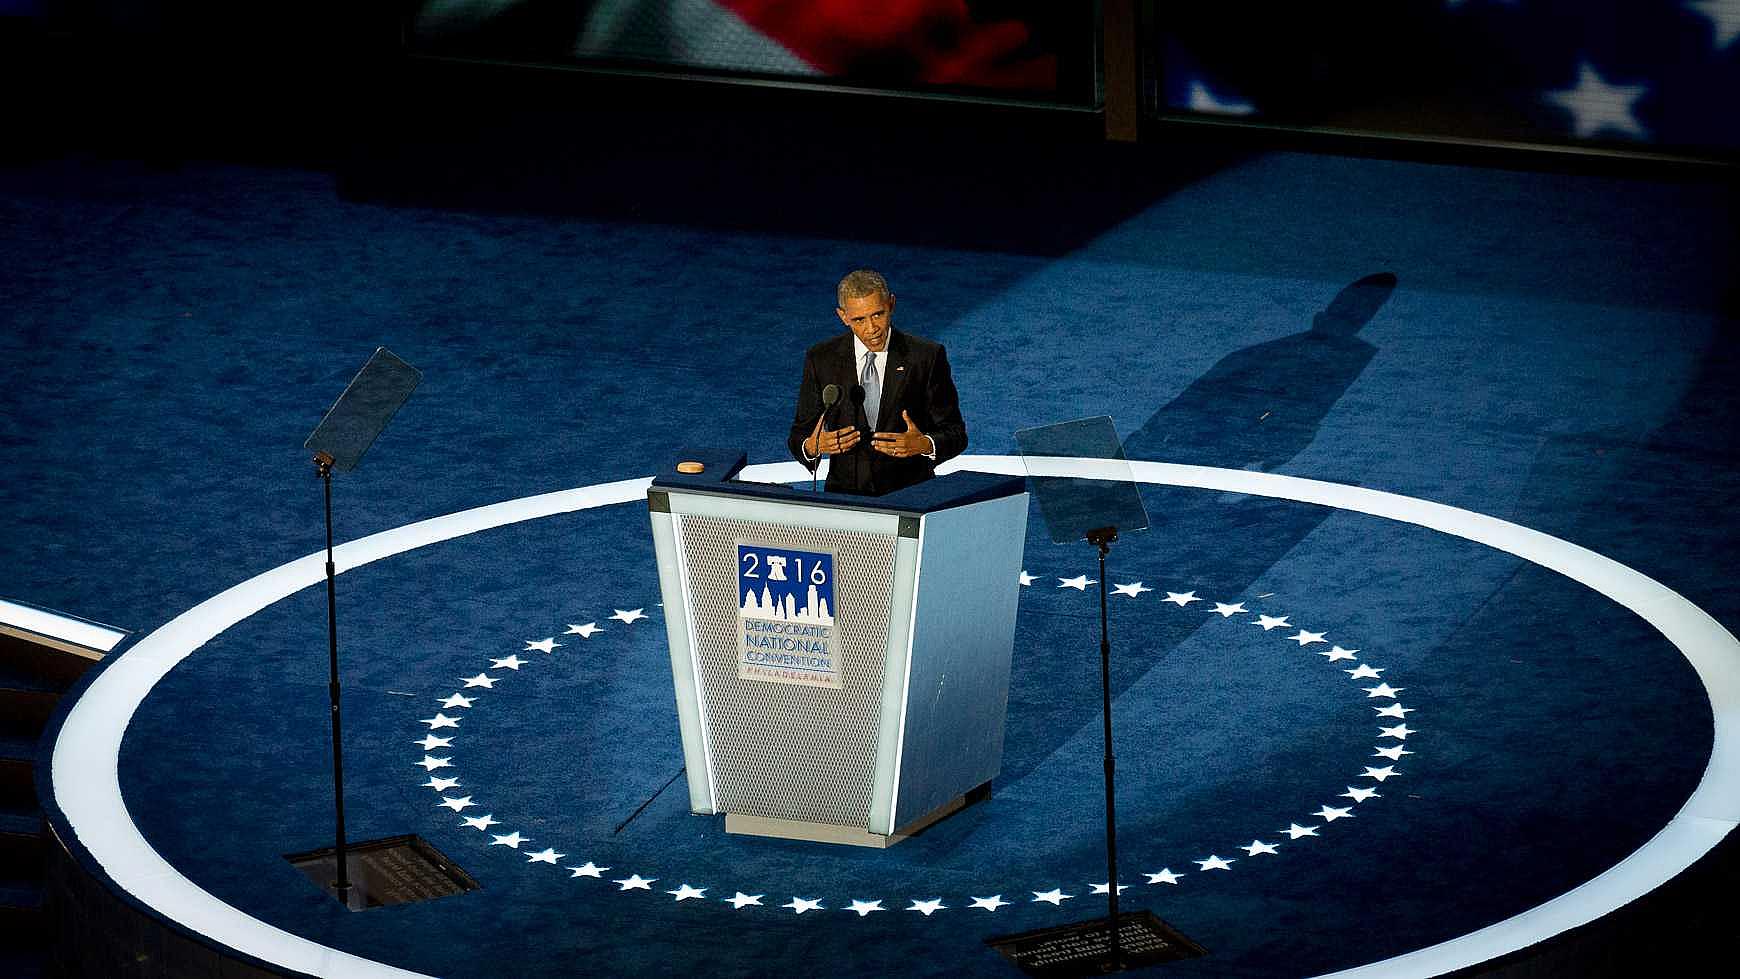 Barack Obama speaking at Democratic National Convention in Philadelphia